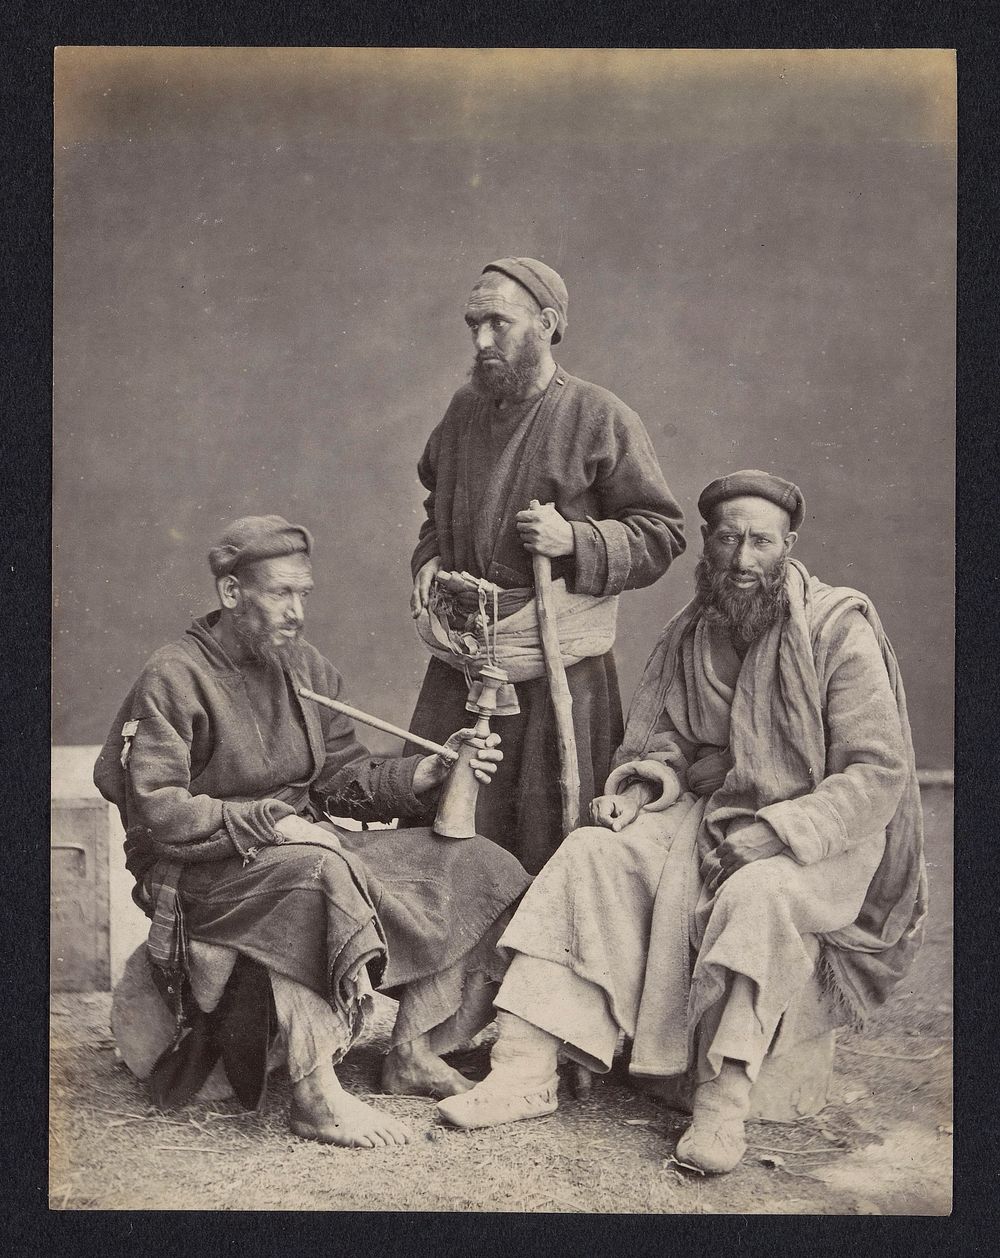 Group portrait of three Balti men in Srinagar, Jammu & Kashmir, India (1869 - 1875) by Frank Mason Good and Francis Frith…